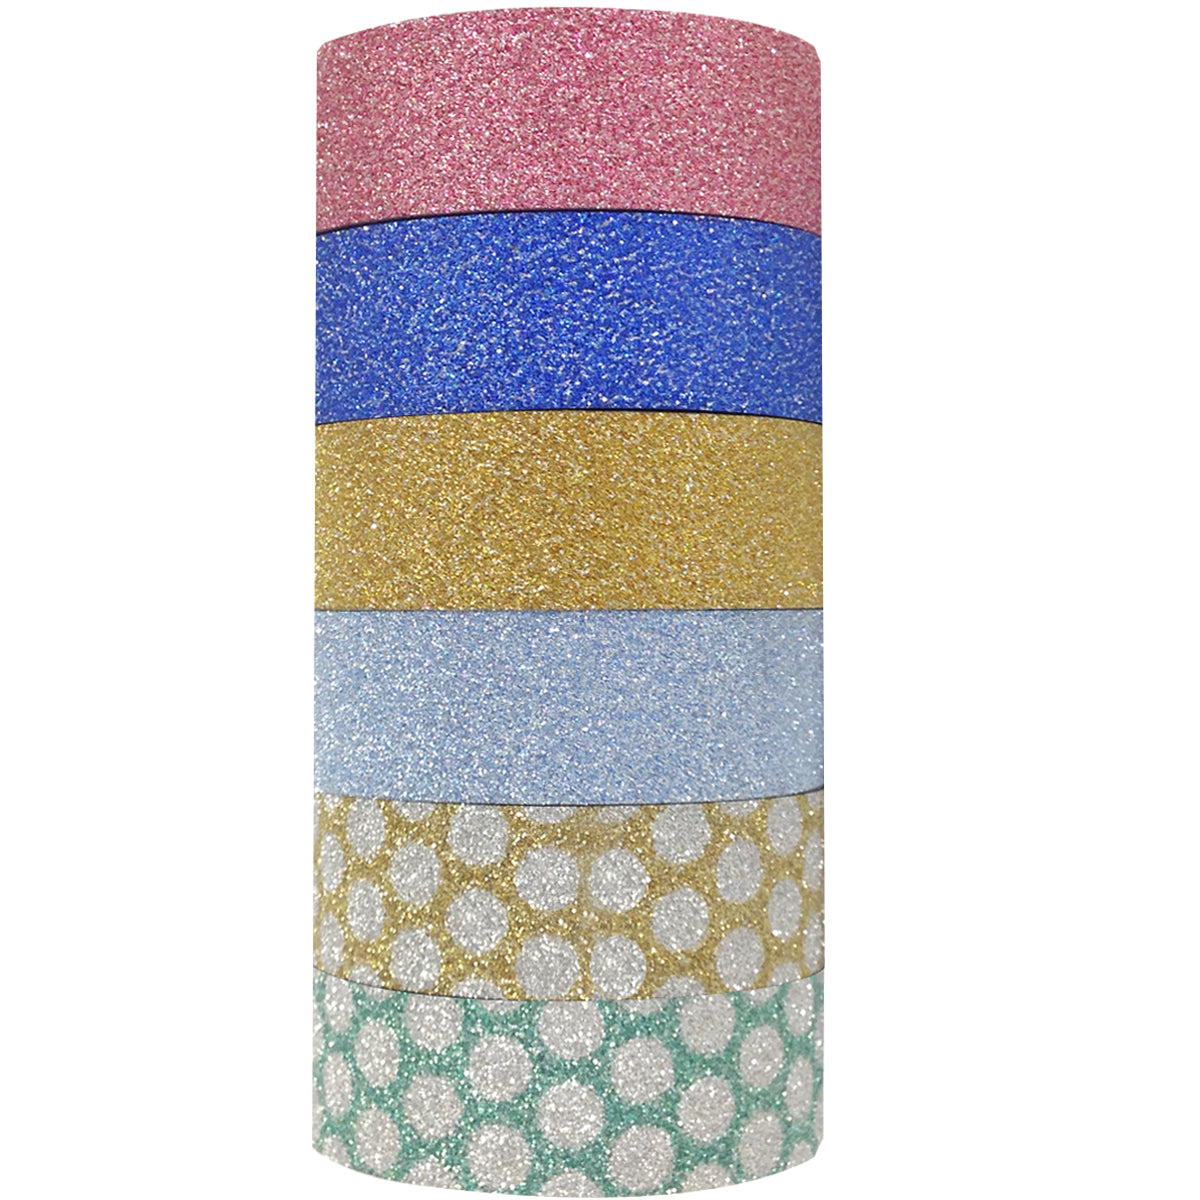 Wrapables Decorative Glitter Washi Masking Tape Multicolor